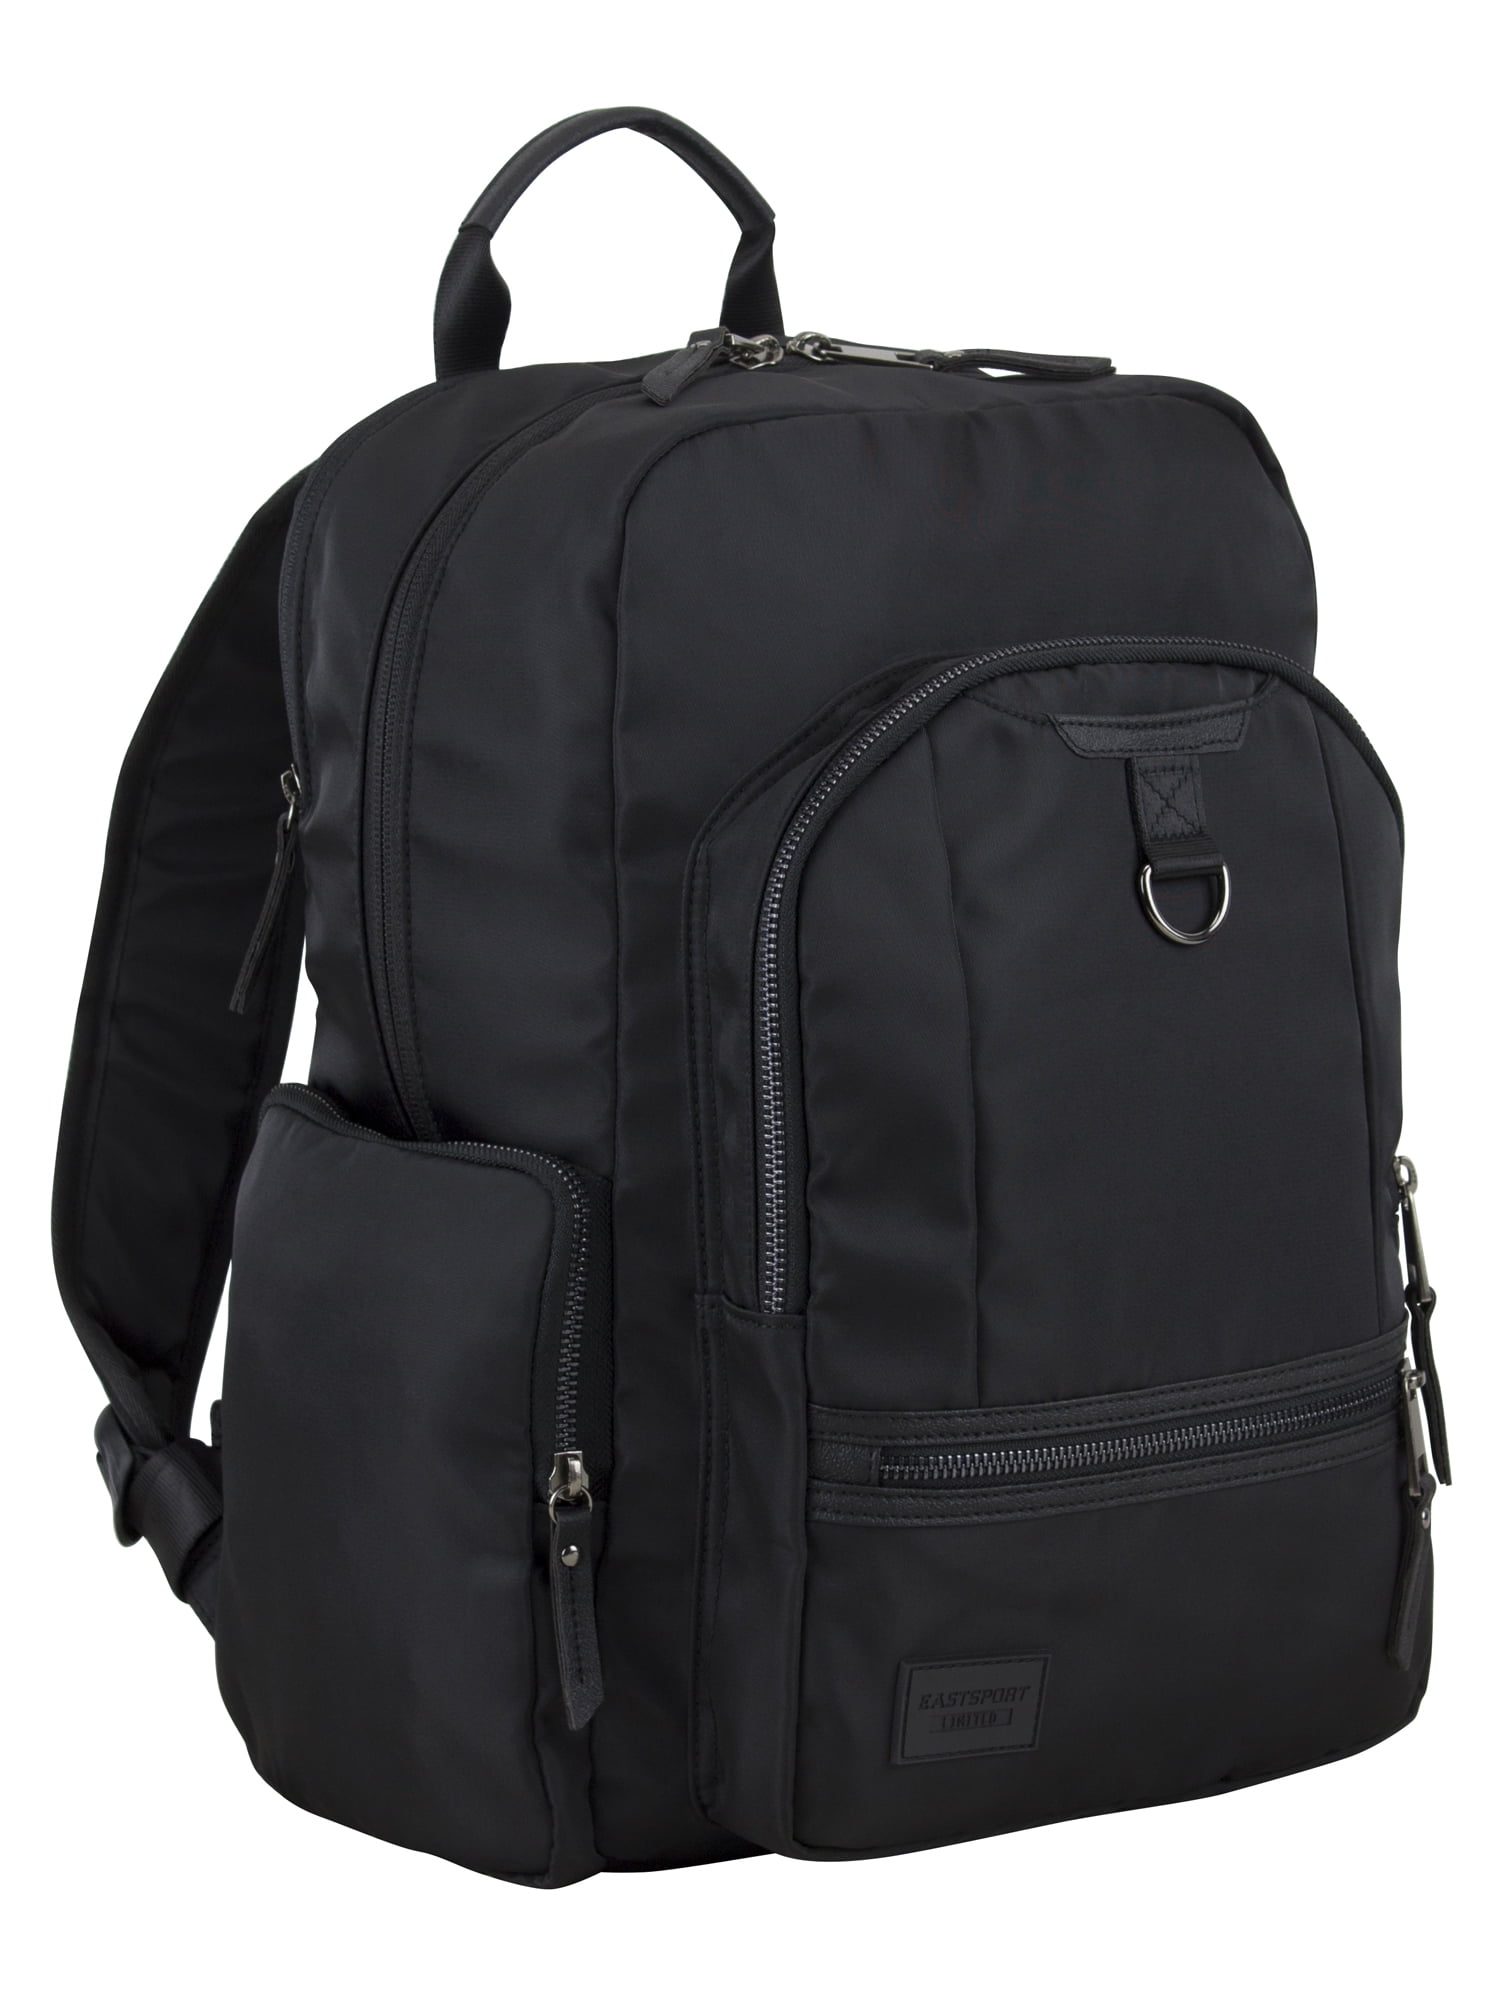 Eastsport Unisex Lauren 2.0 Backpack, Black